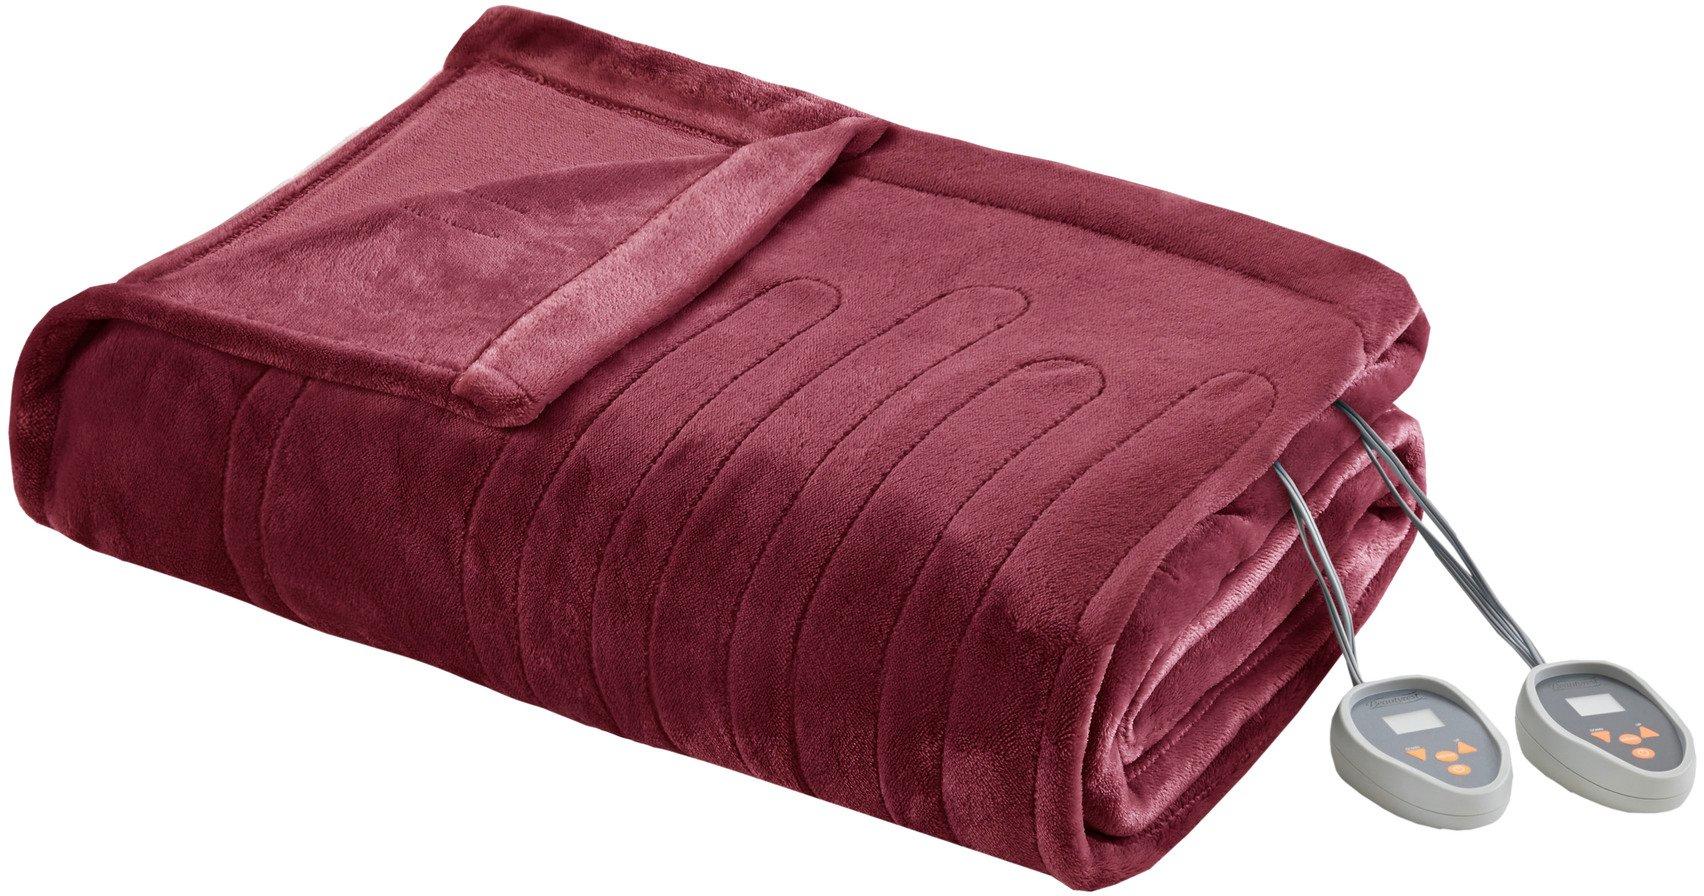 Plush Heated Blanket